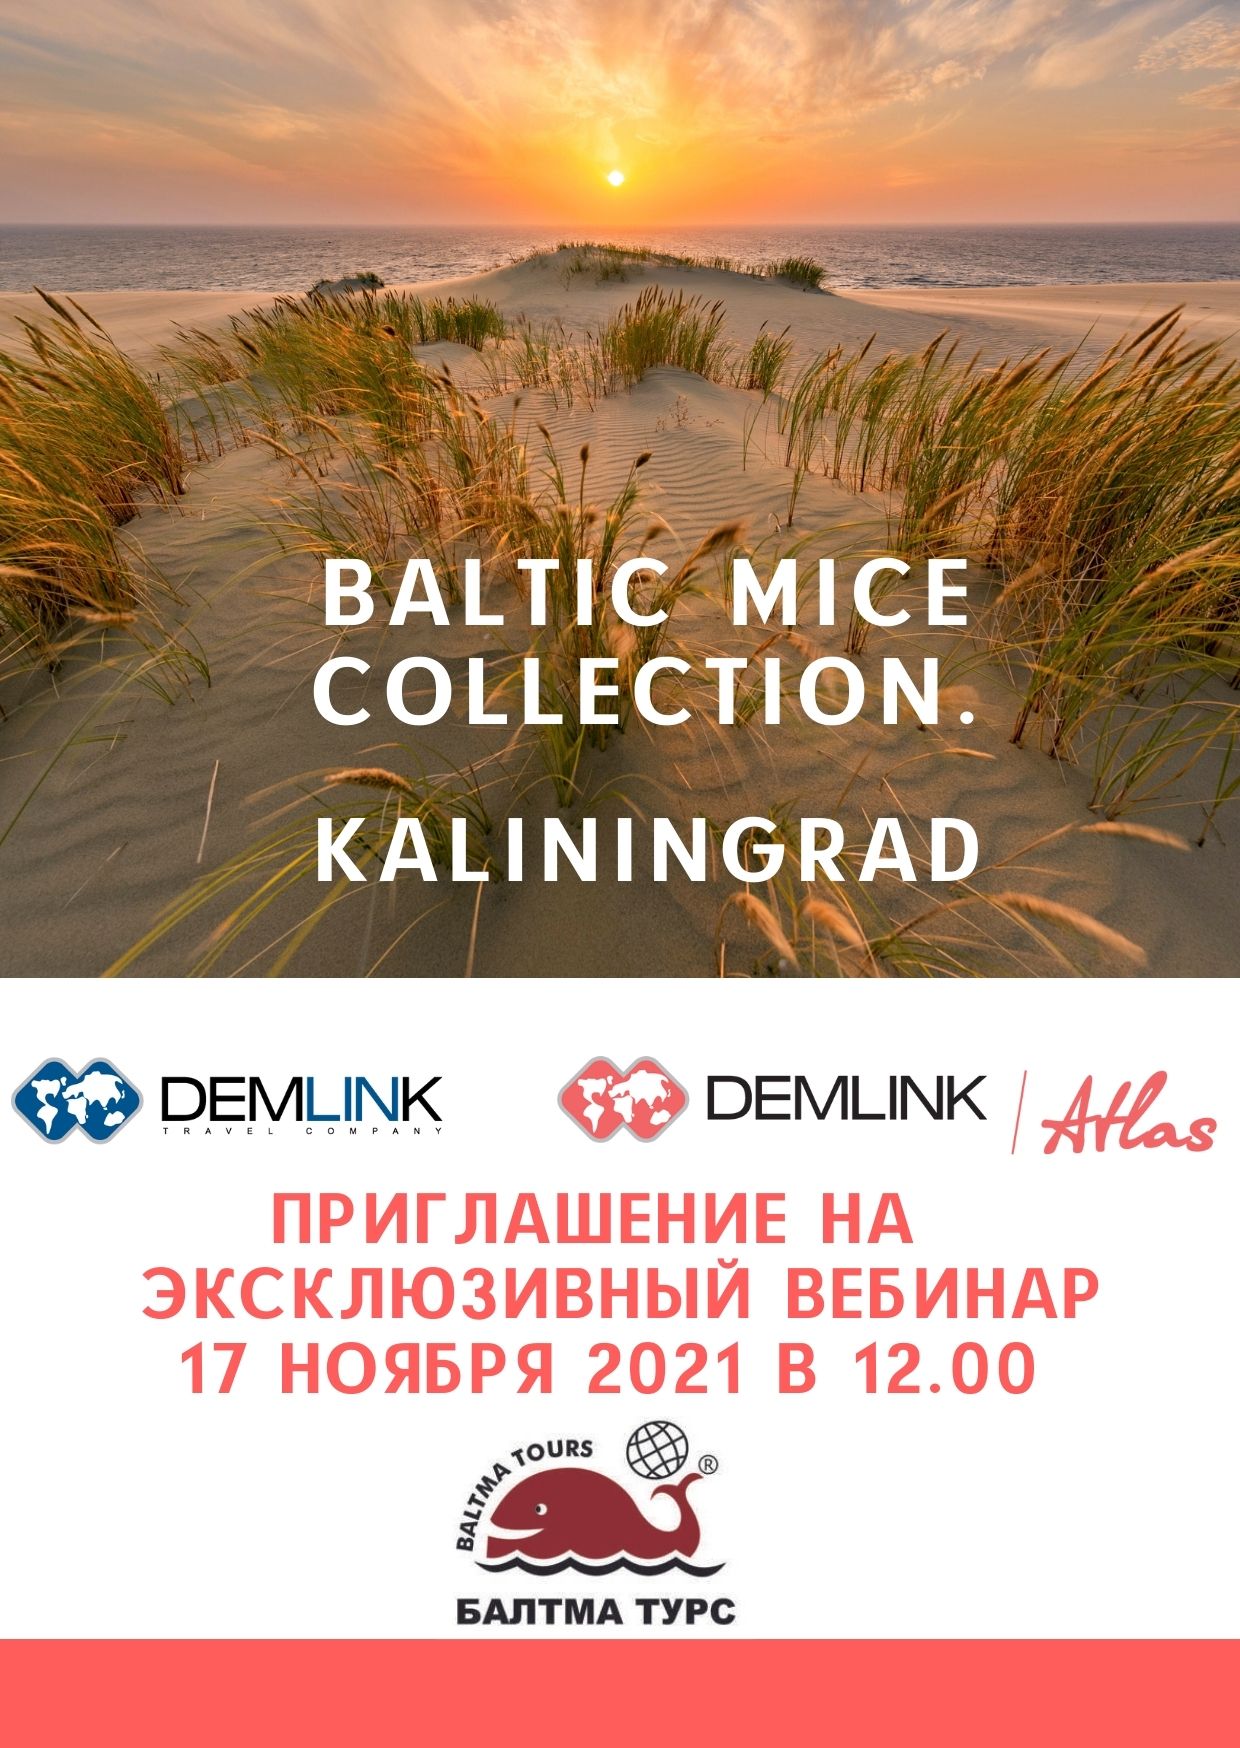 Demlink MICE Приглашение на вебинар_Baltic MICE Collection. Kaliningrad_ 17.11.21.jpg